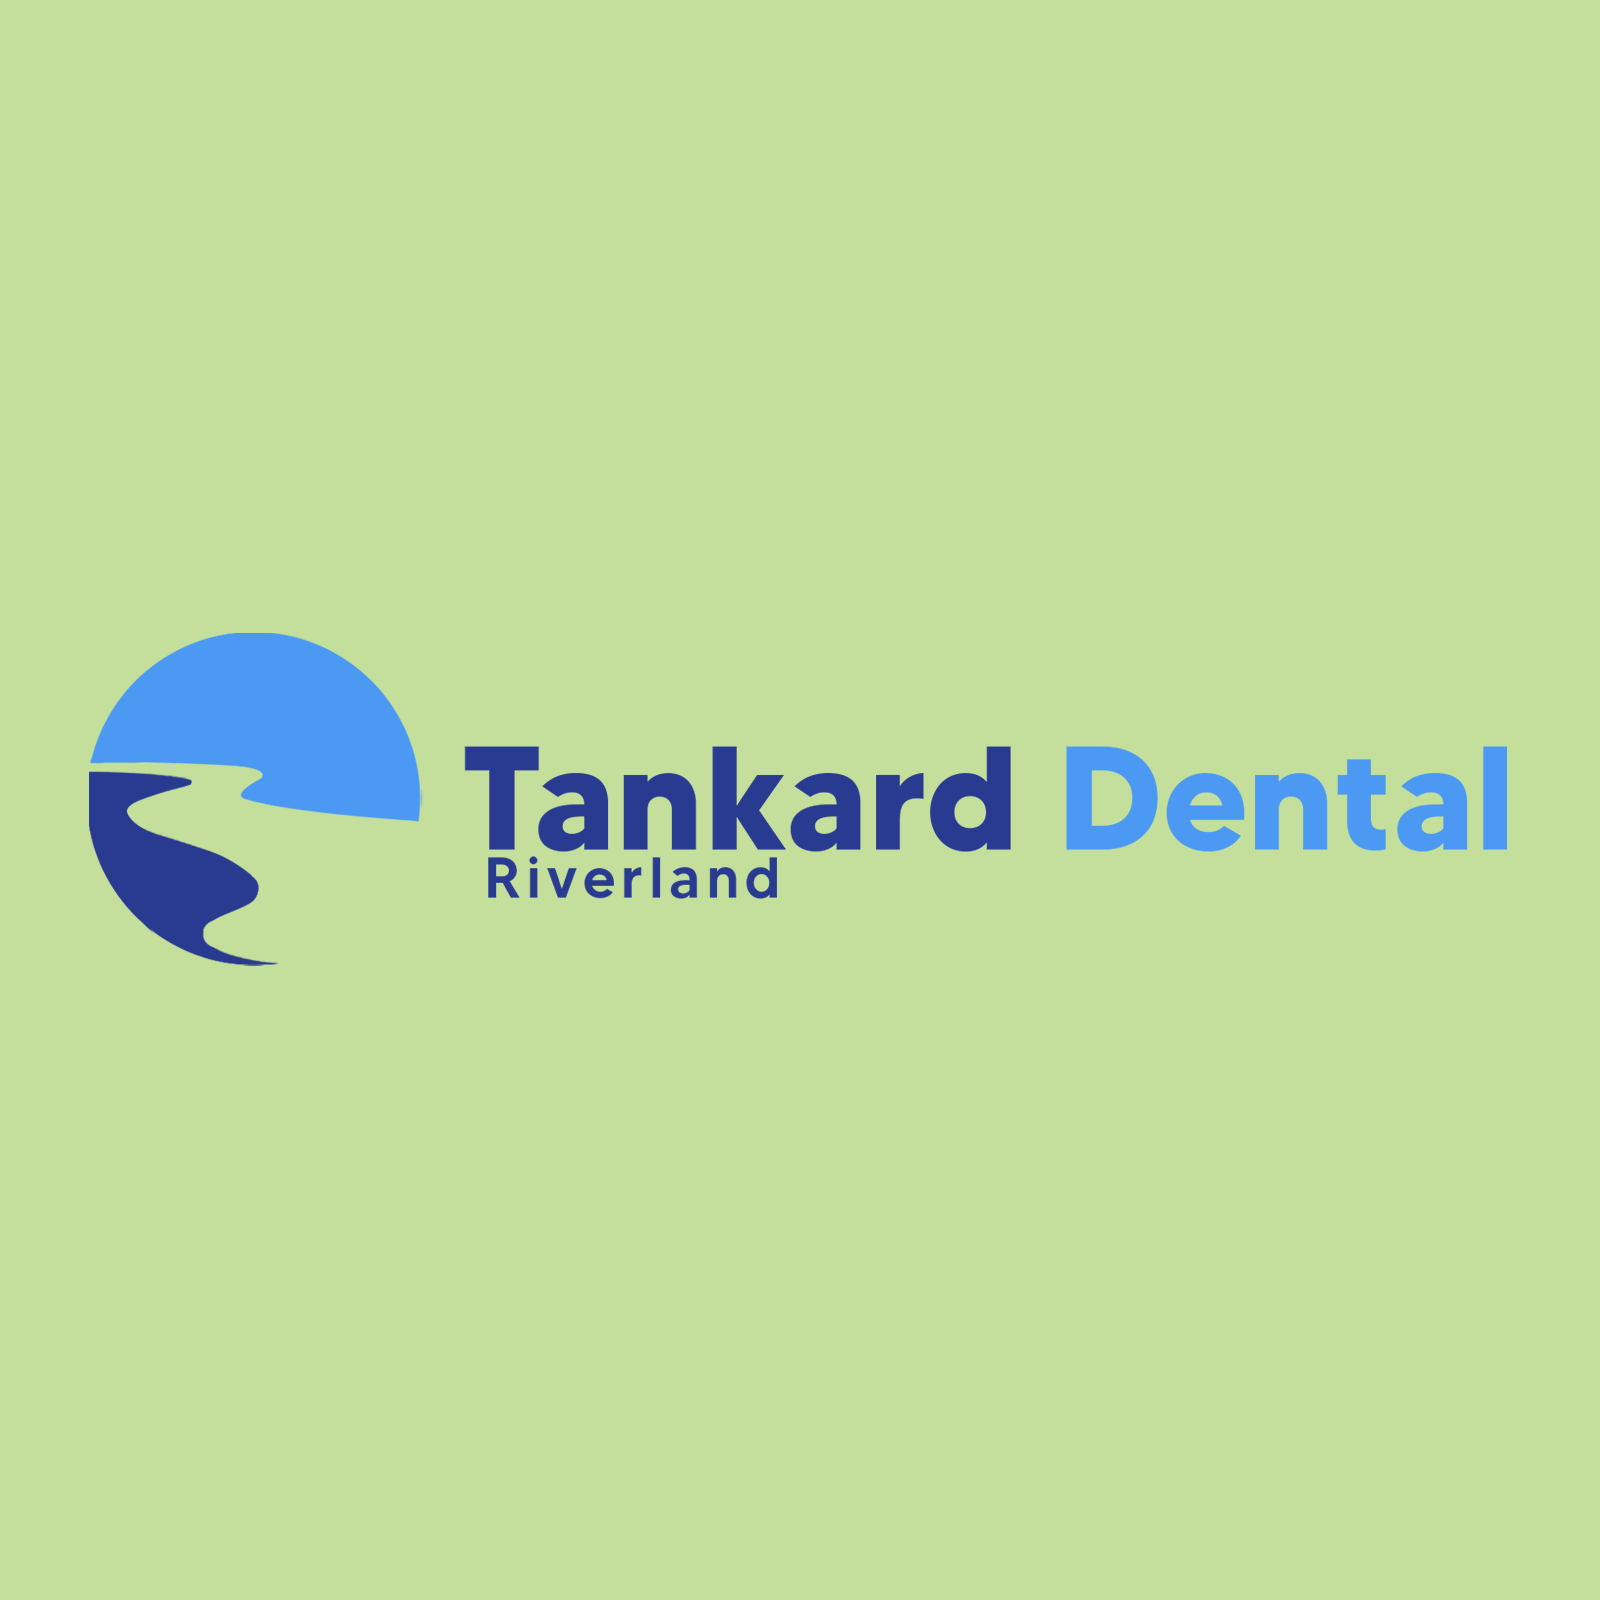 Tankard Dental